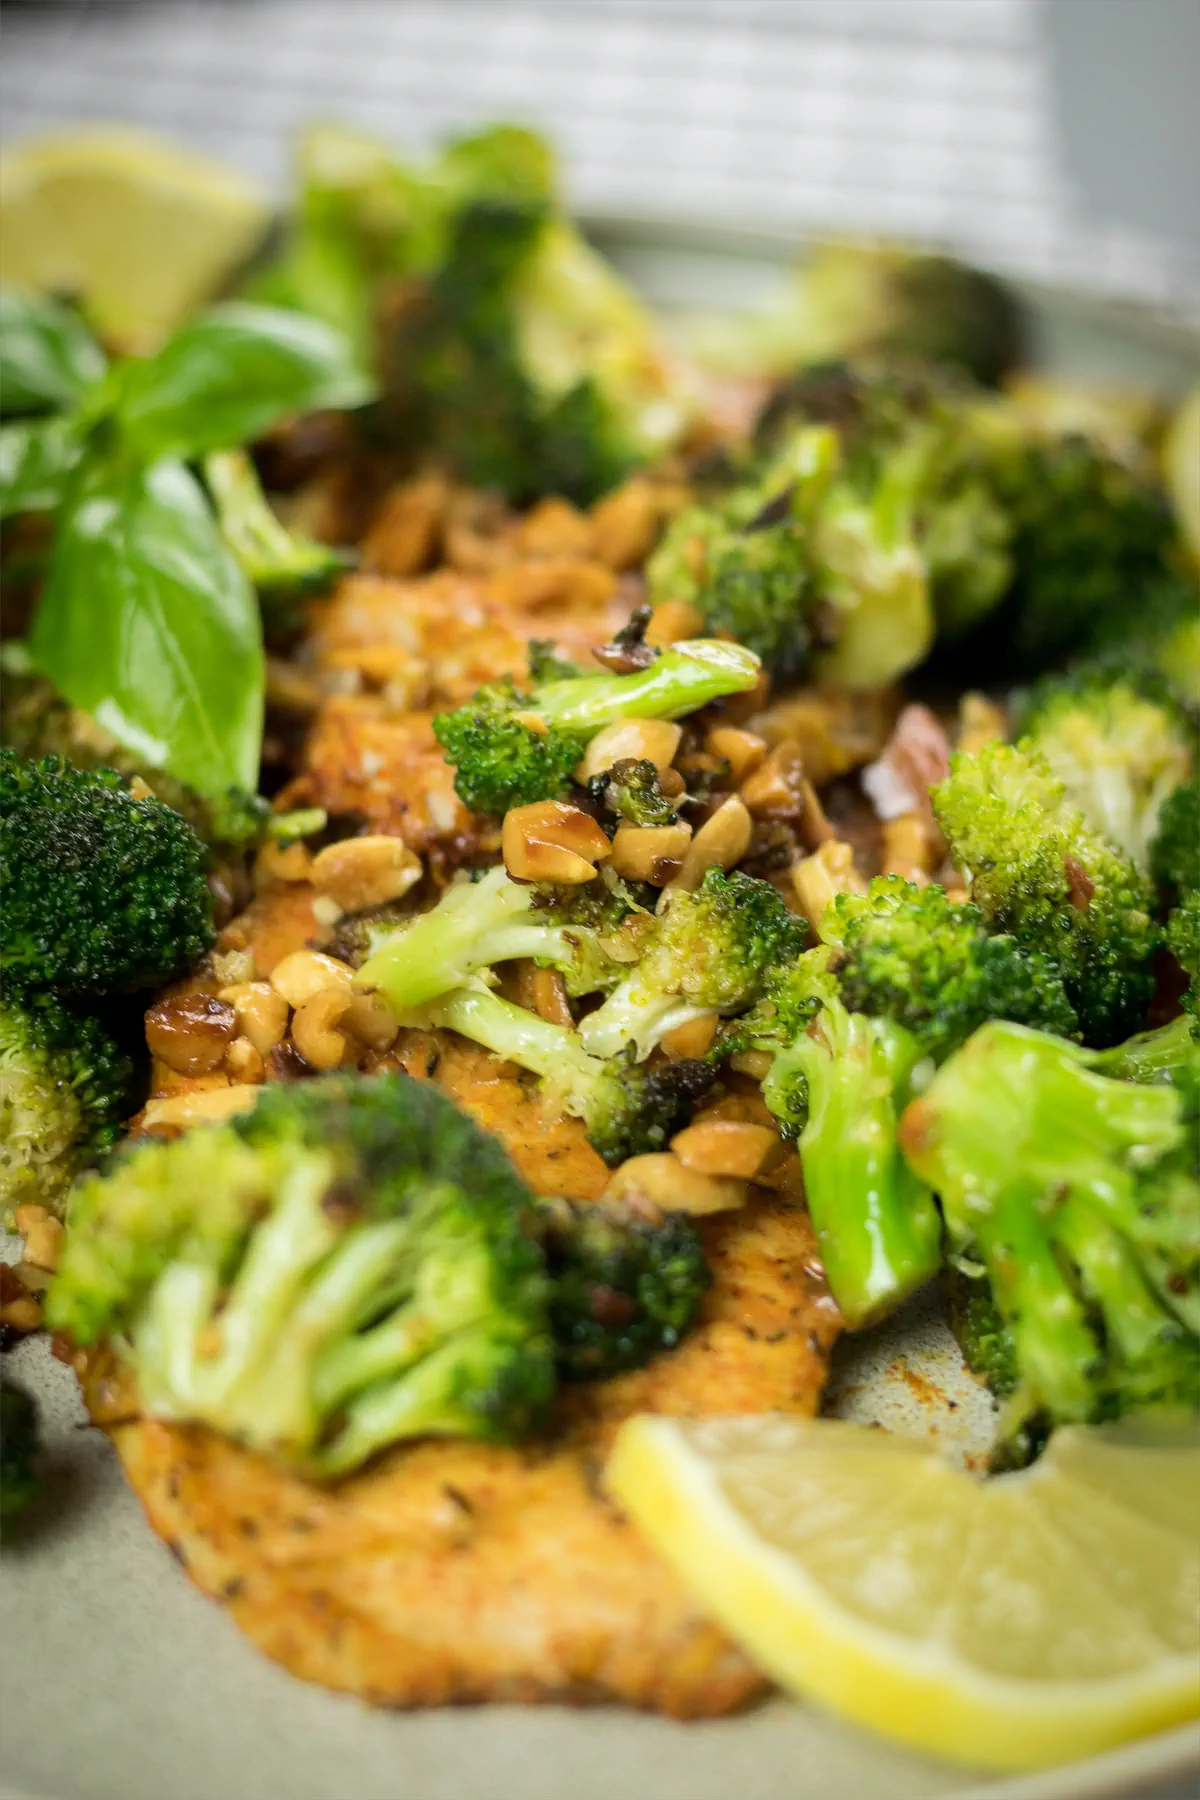 Keto recipe featuring pork chops and broccoli.